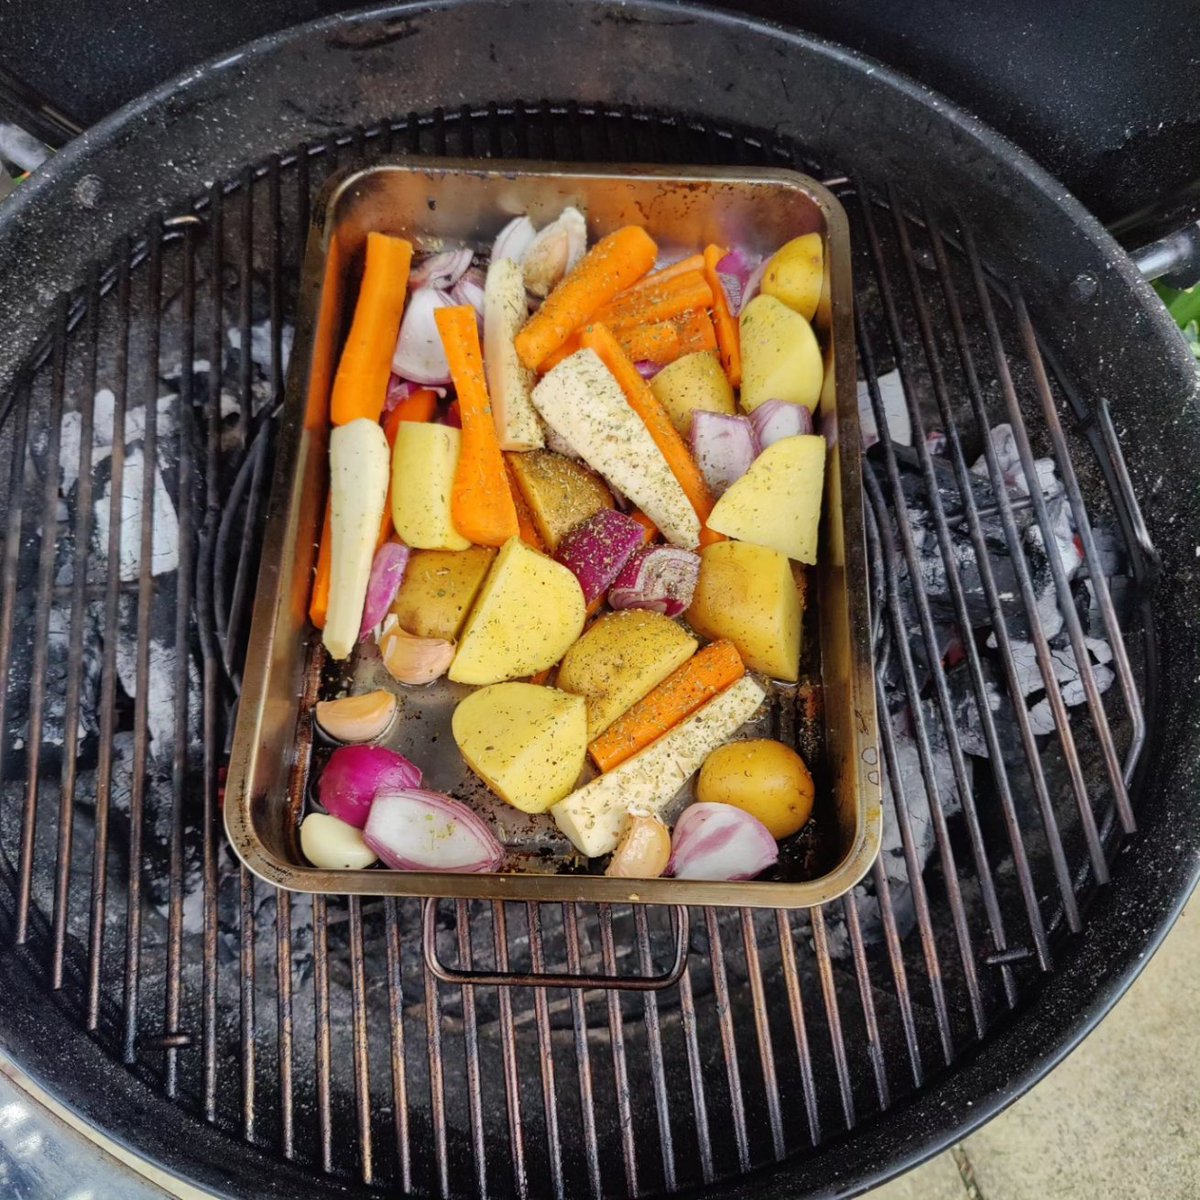 Roast beef and slow roasted Veggies for tea tonight

Cook times
Beef 2hrs 30
Charcoal temp 180c
internal temp 70c (158f)

#outdoorcooking
@weberuk
@bigkproductsltd